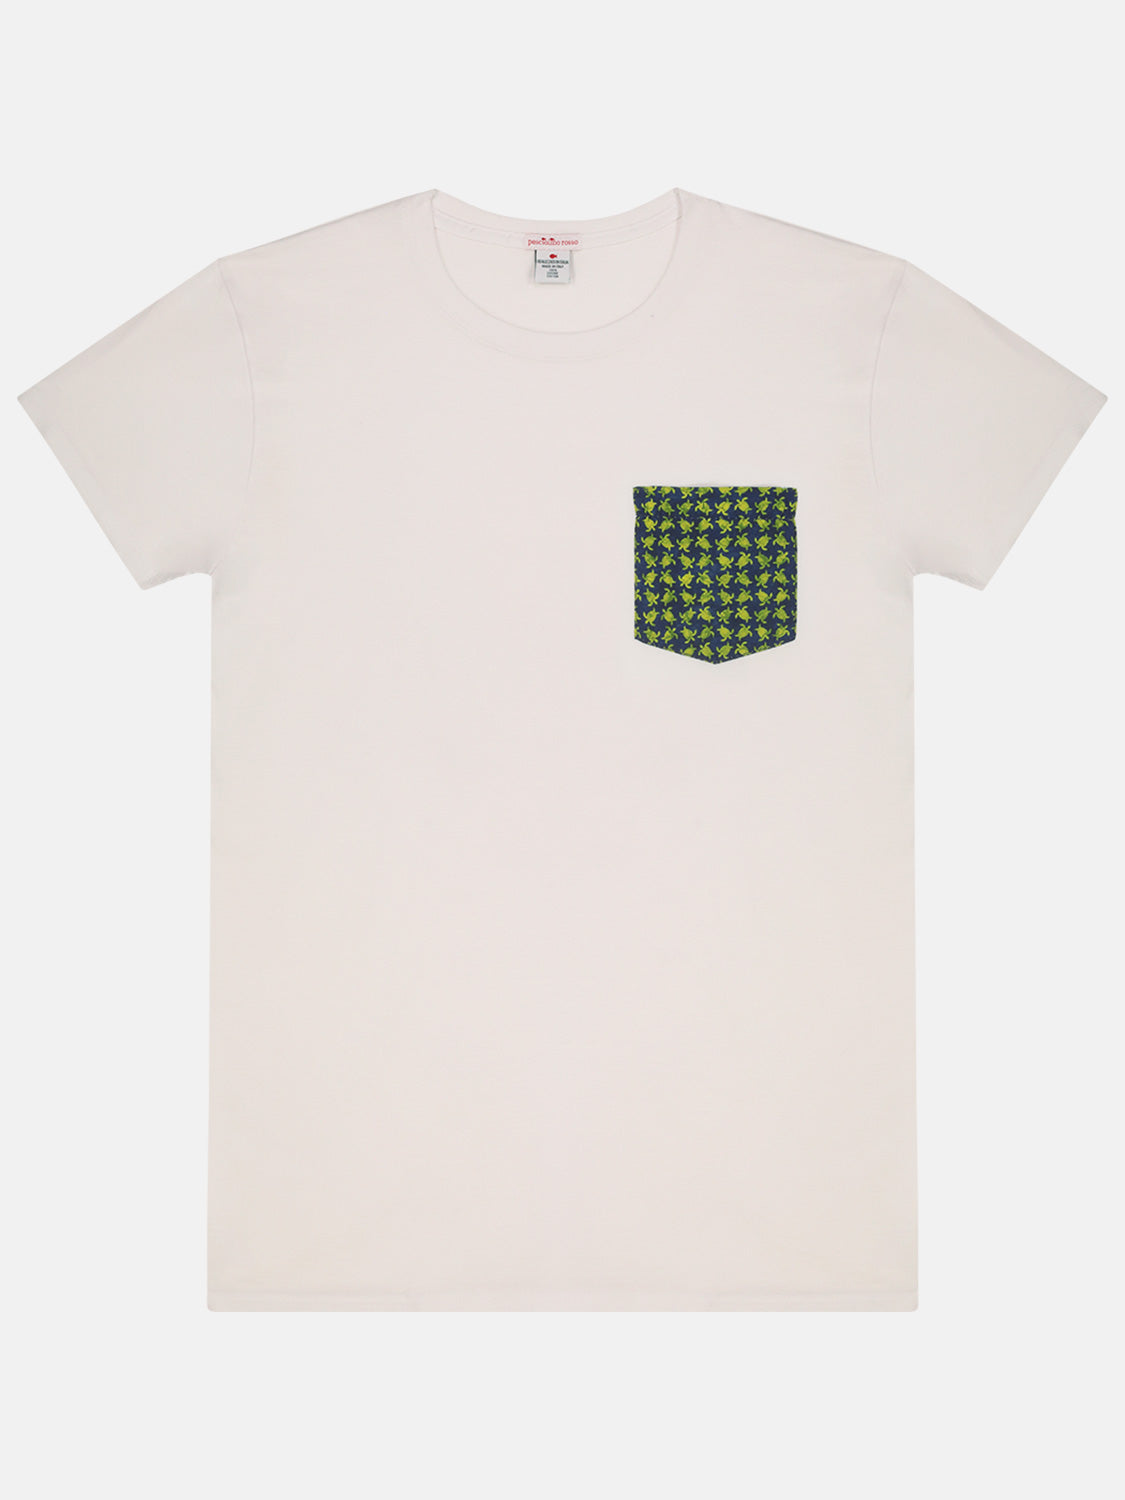 T-Shirt Uomo Tartarughe Verdi